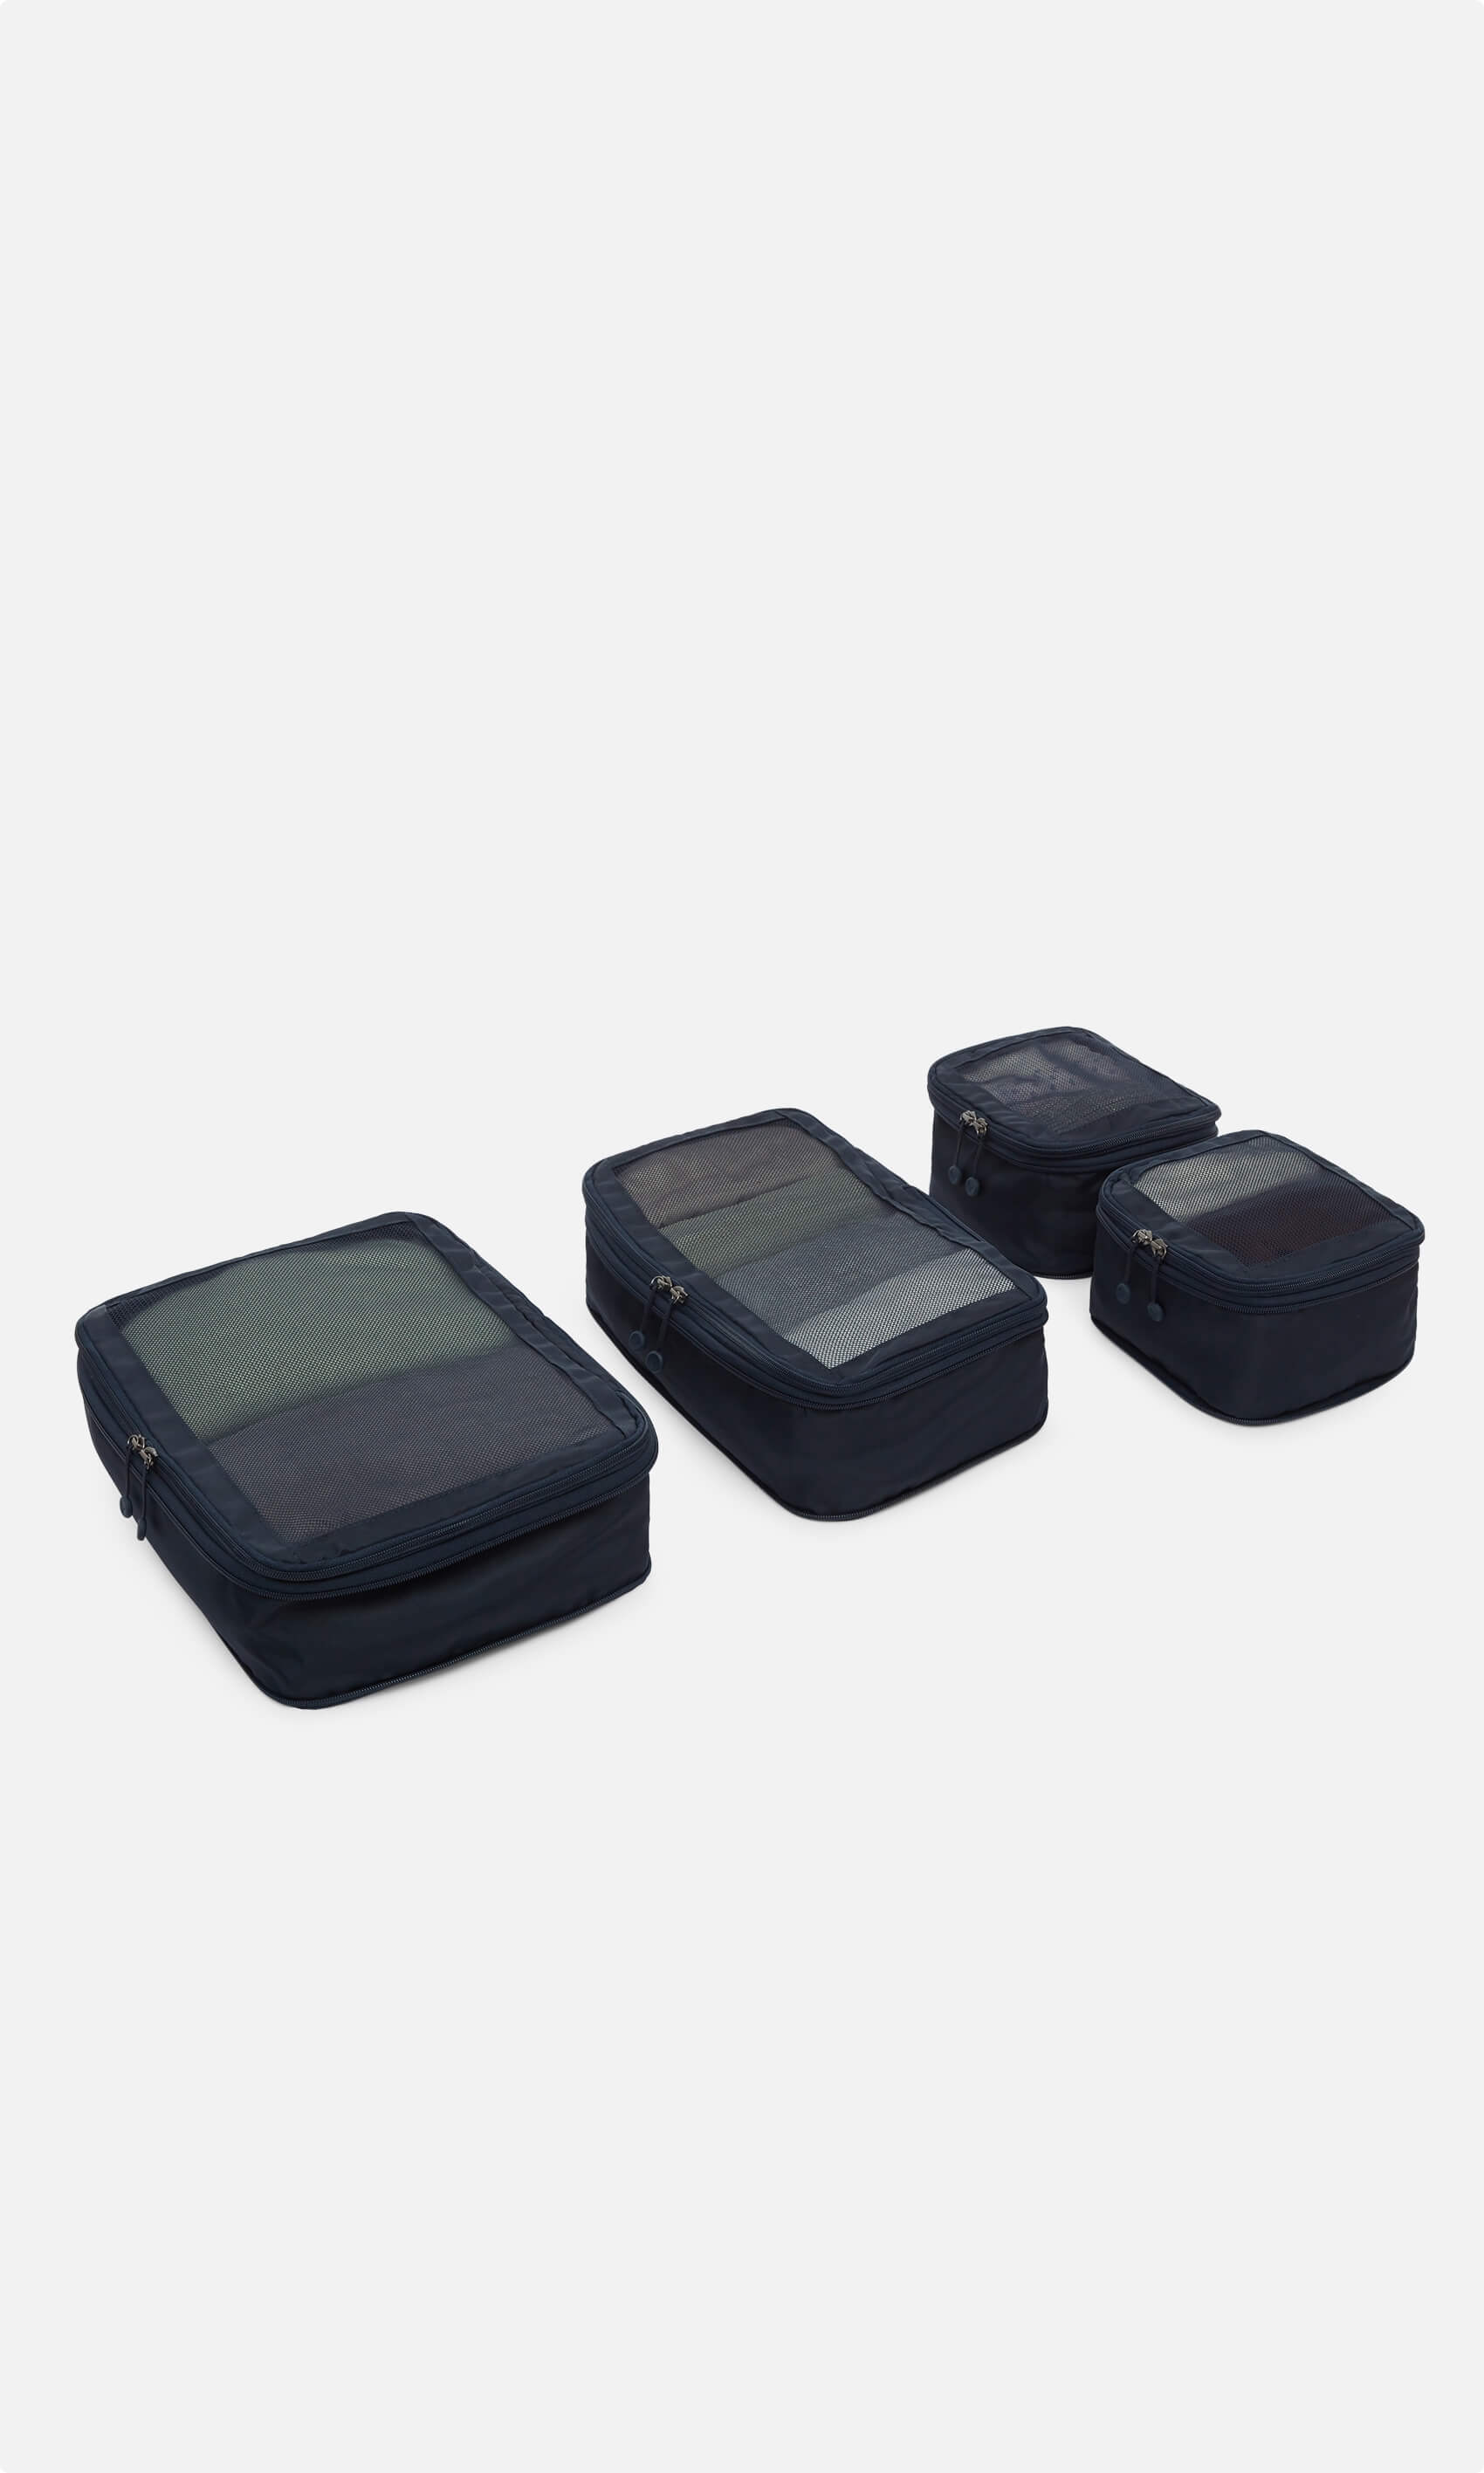 Antler Luggage -  Chelsea 4 packing cubes in navy - Accessories Chelsea 4 Packing Cubes Navy | Travel Accessories | Antler UK